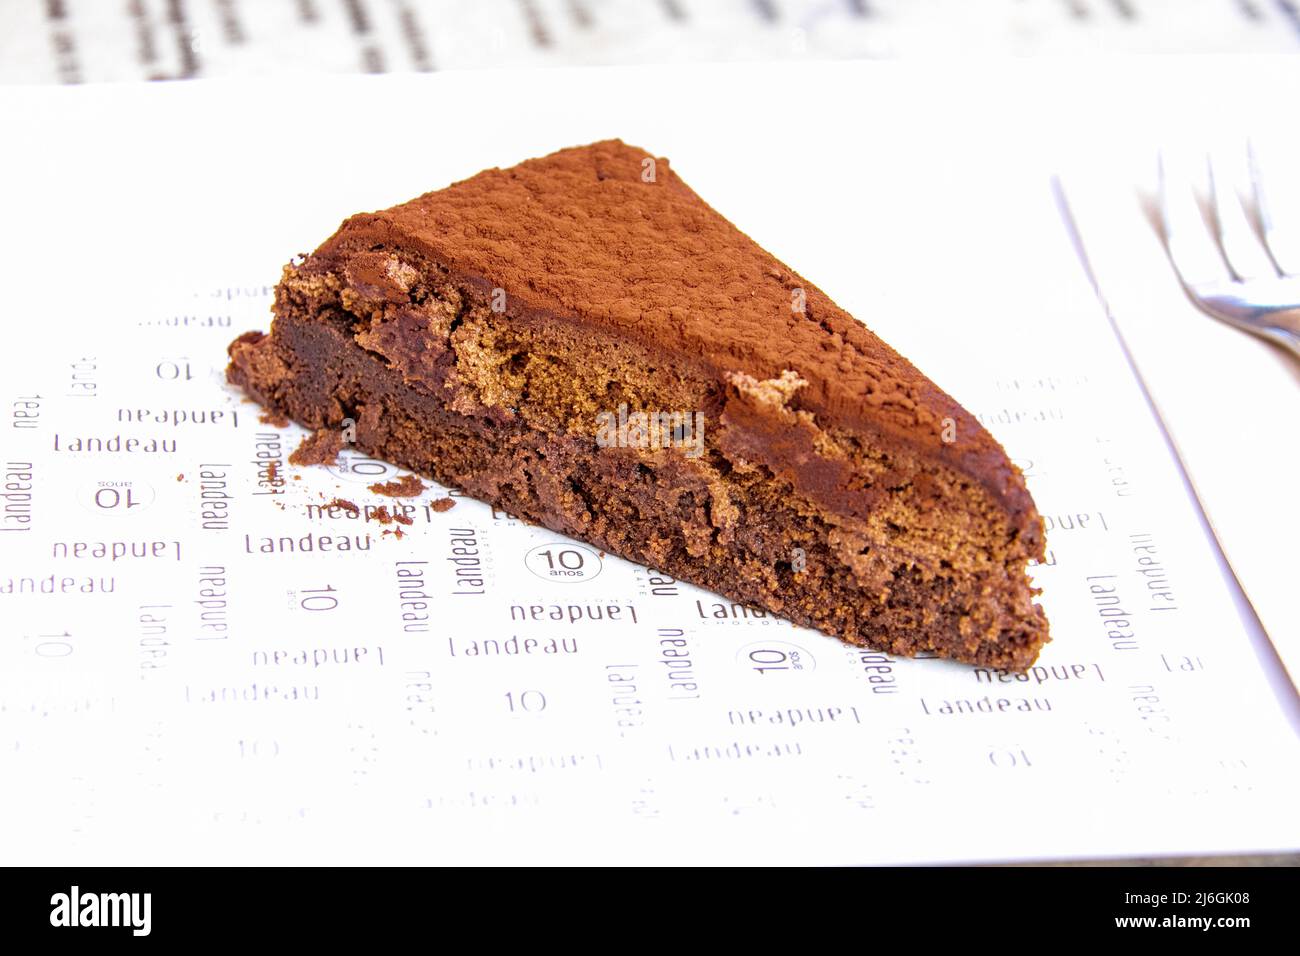 World's best chocolate cake, Landeau chocolate, Lisbon, Portugal Stock Photo